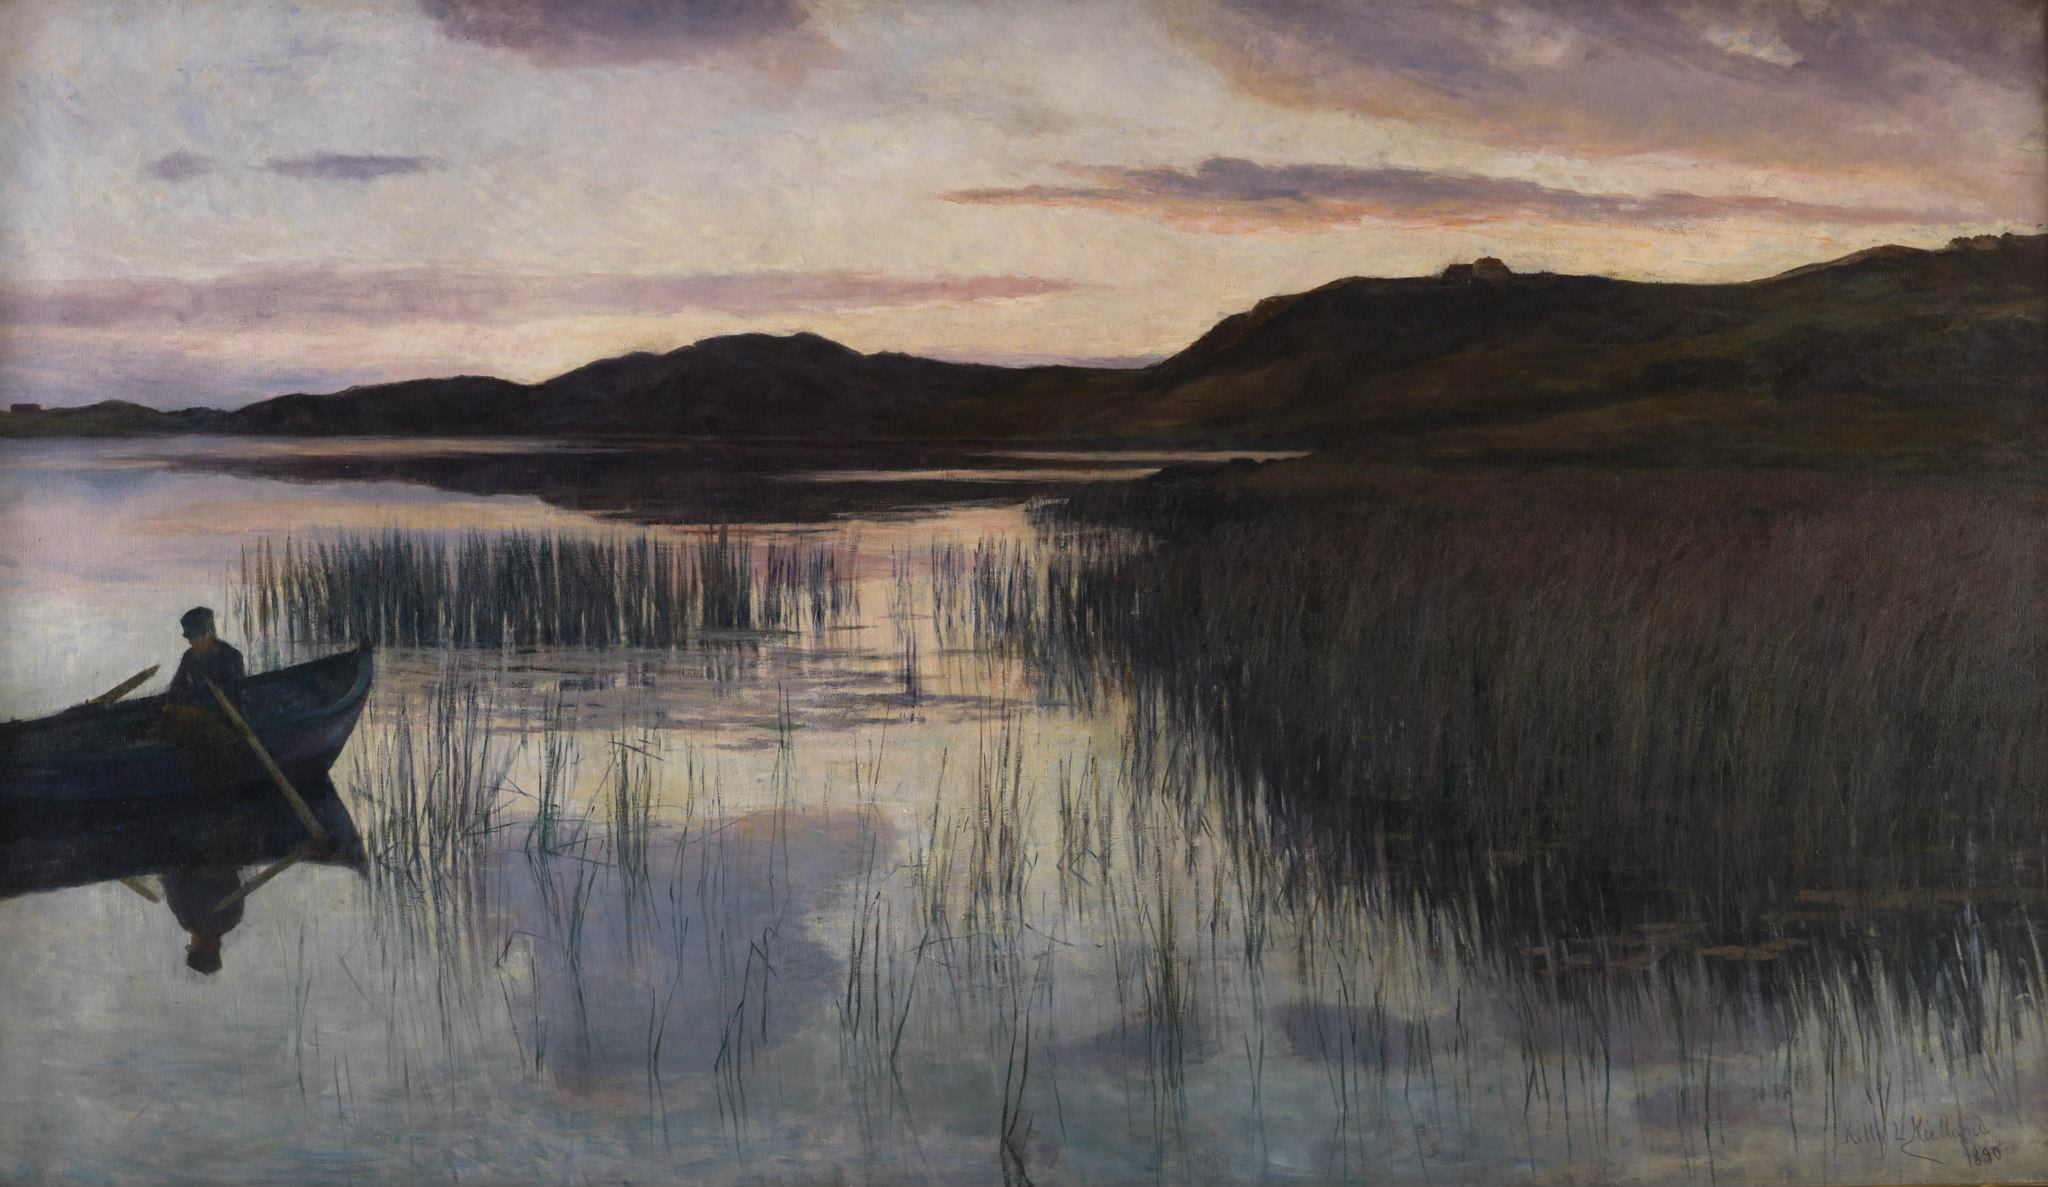 Paisagem vespertina em Stokkavatnet by Kitty Kielland - 1890 - 115 x 120 cm 